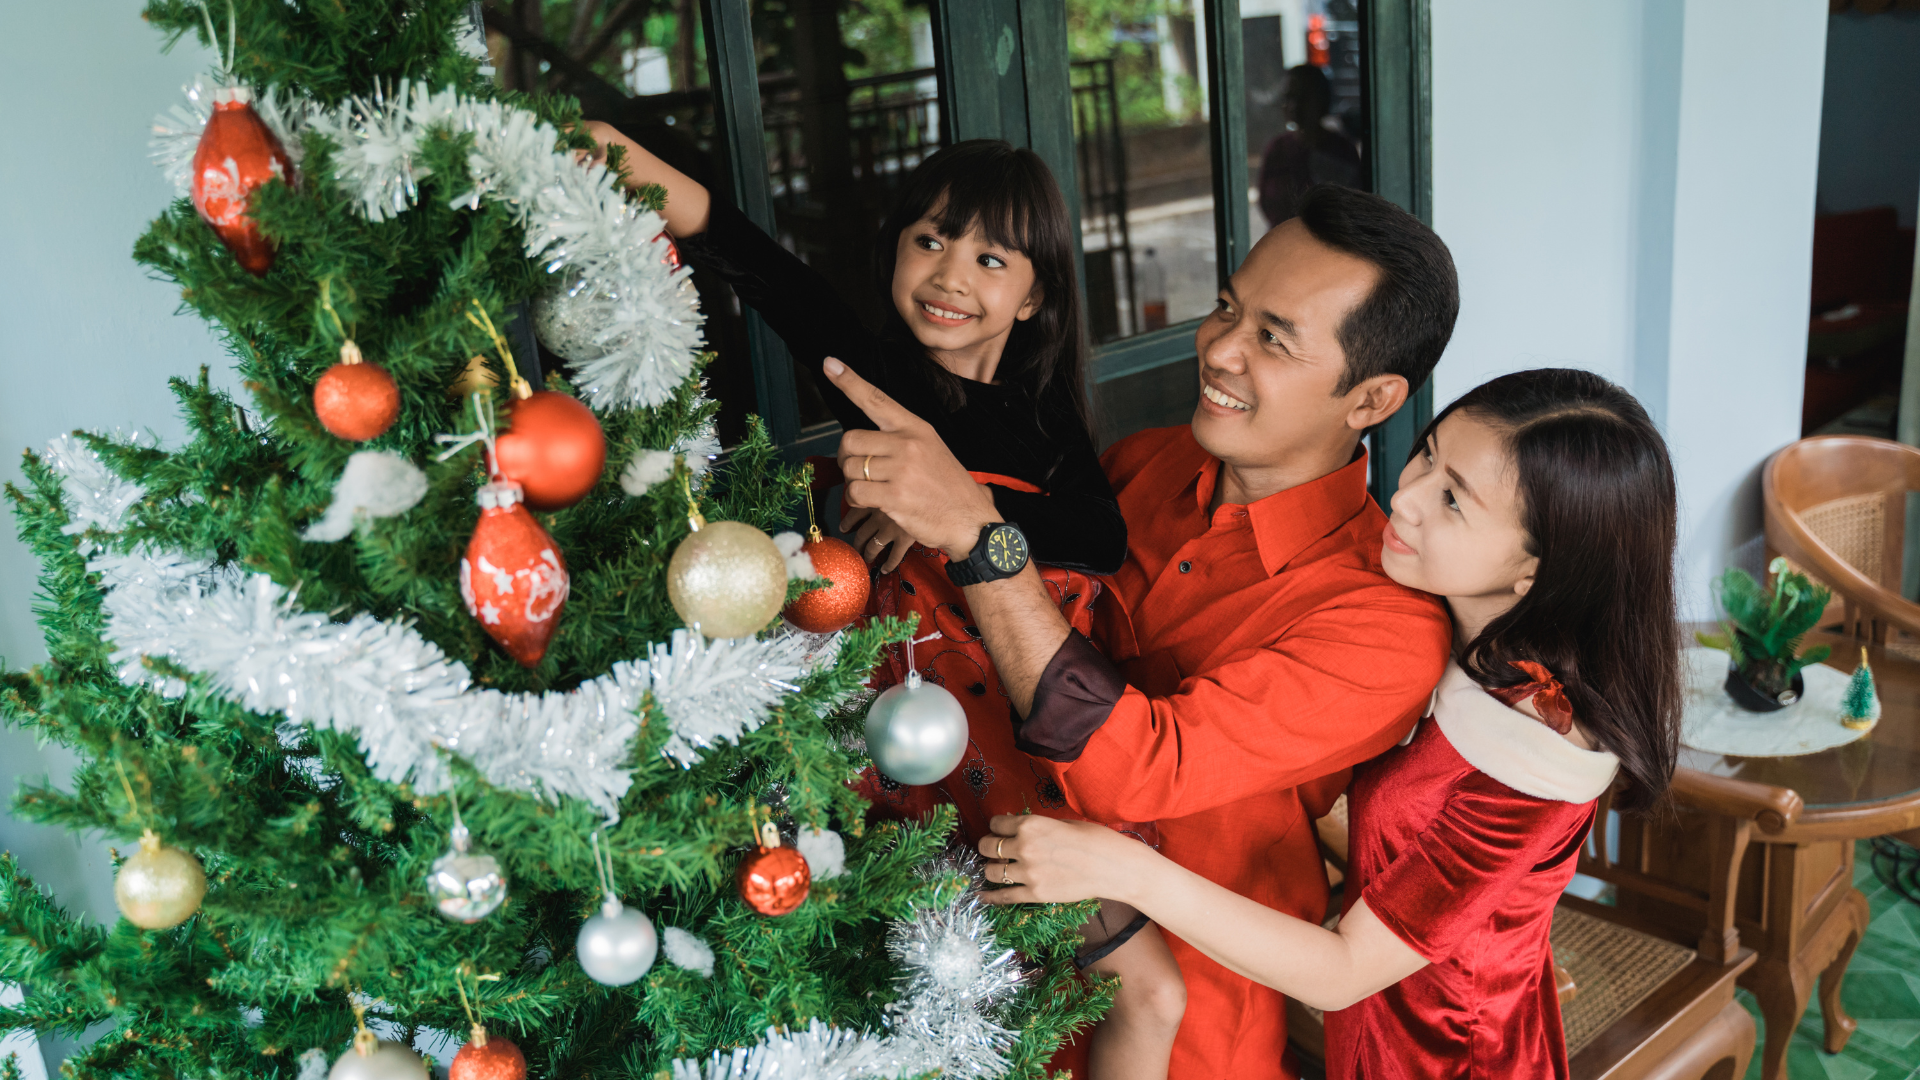 How to celebrate a stress-free Christmas season